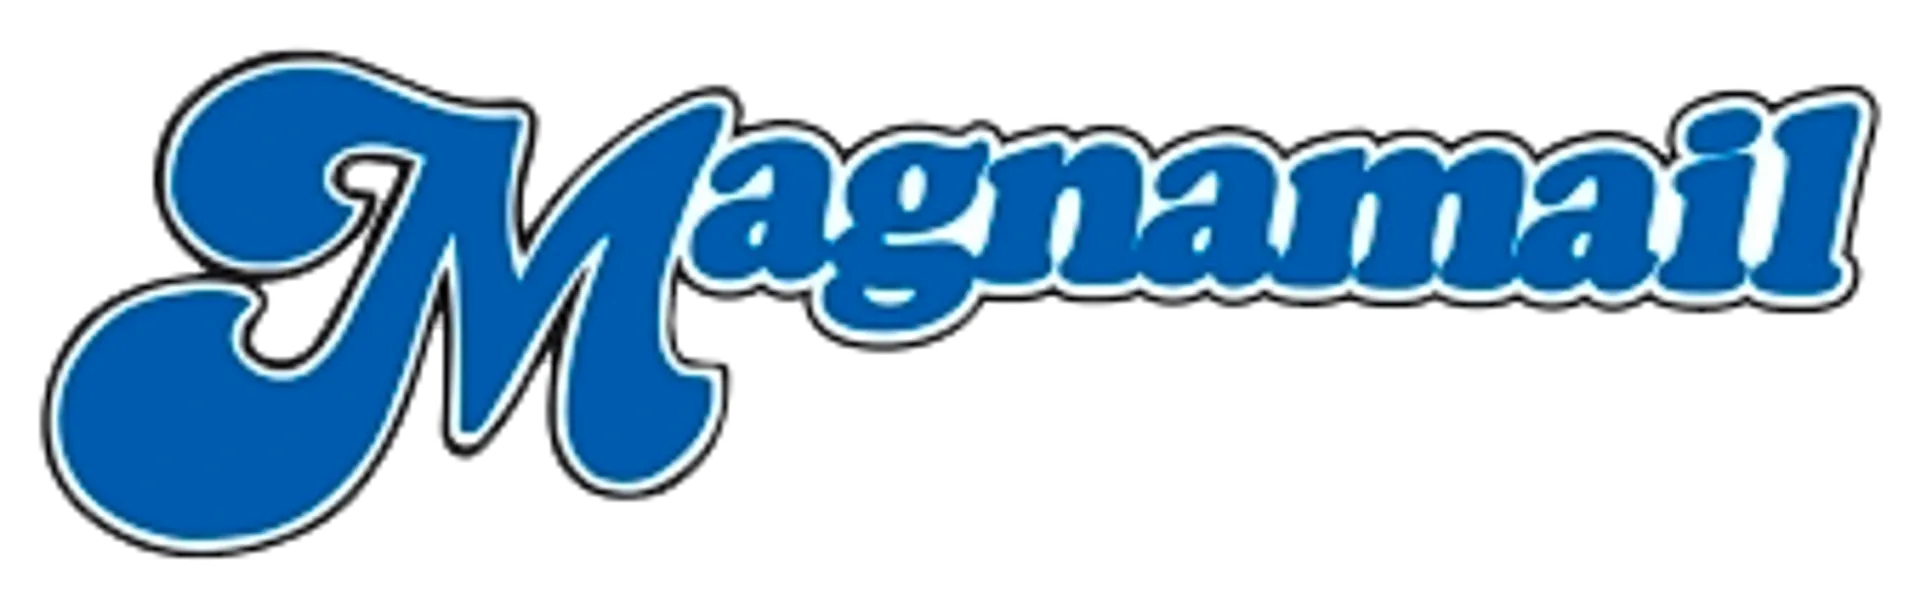 MAGNAMAIL logo of current catalogue